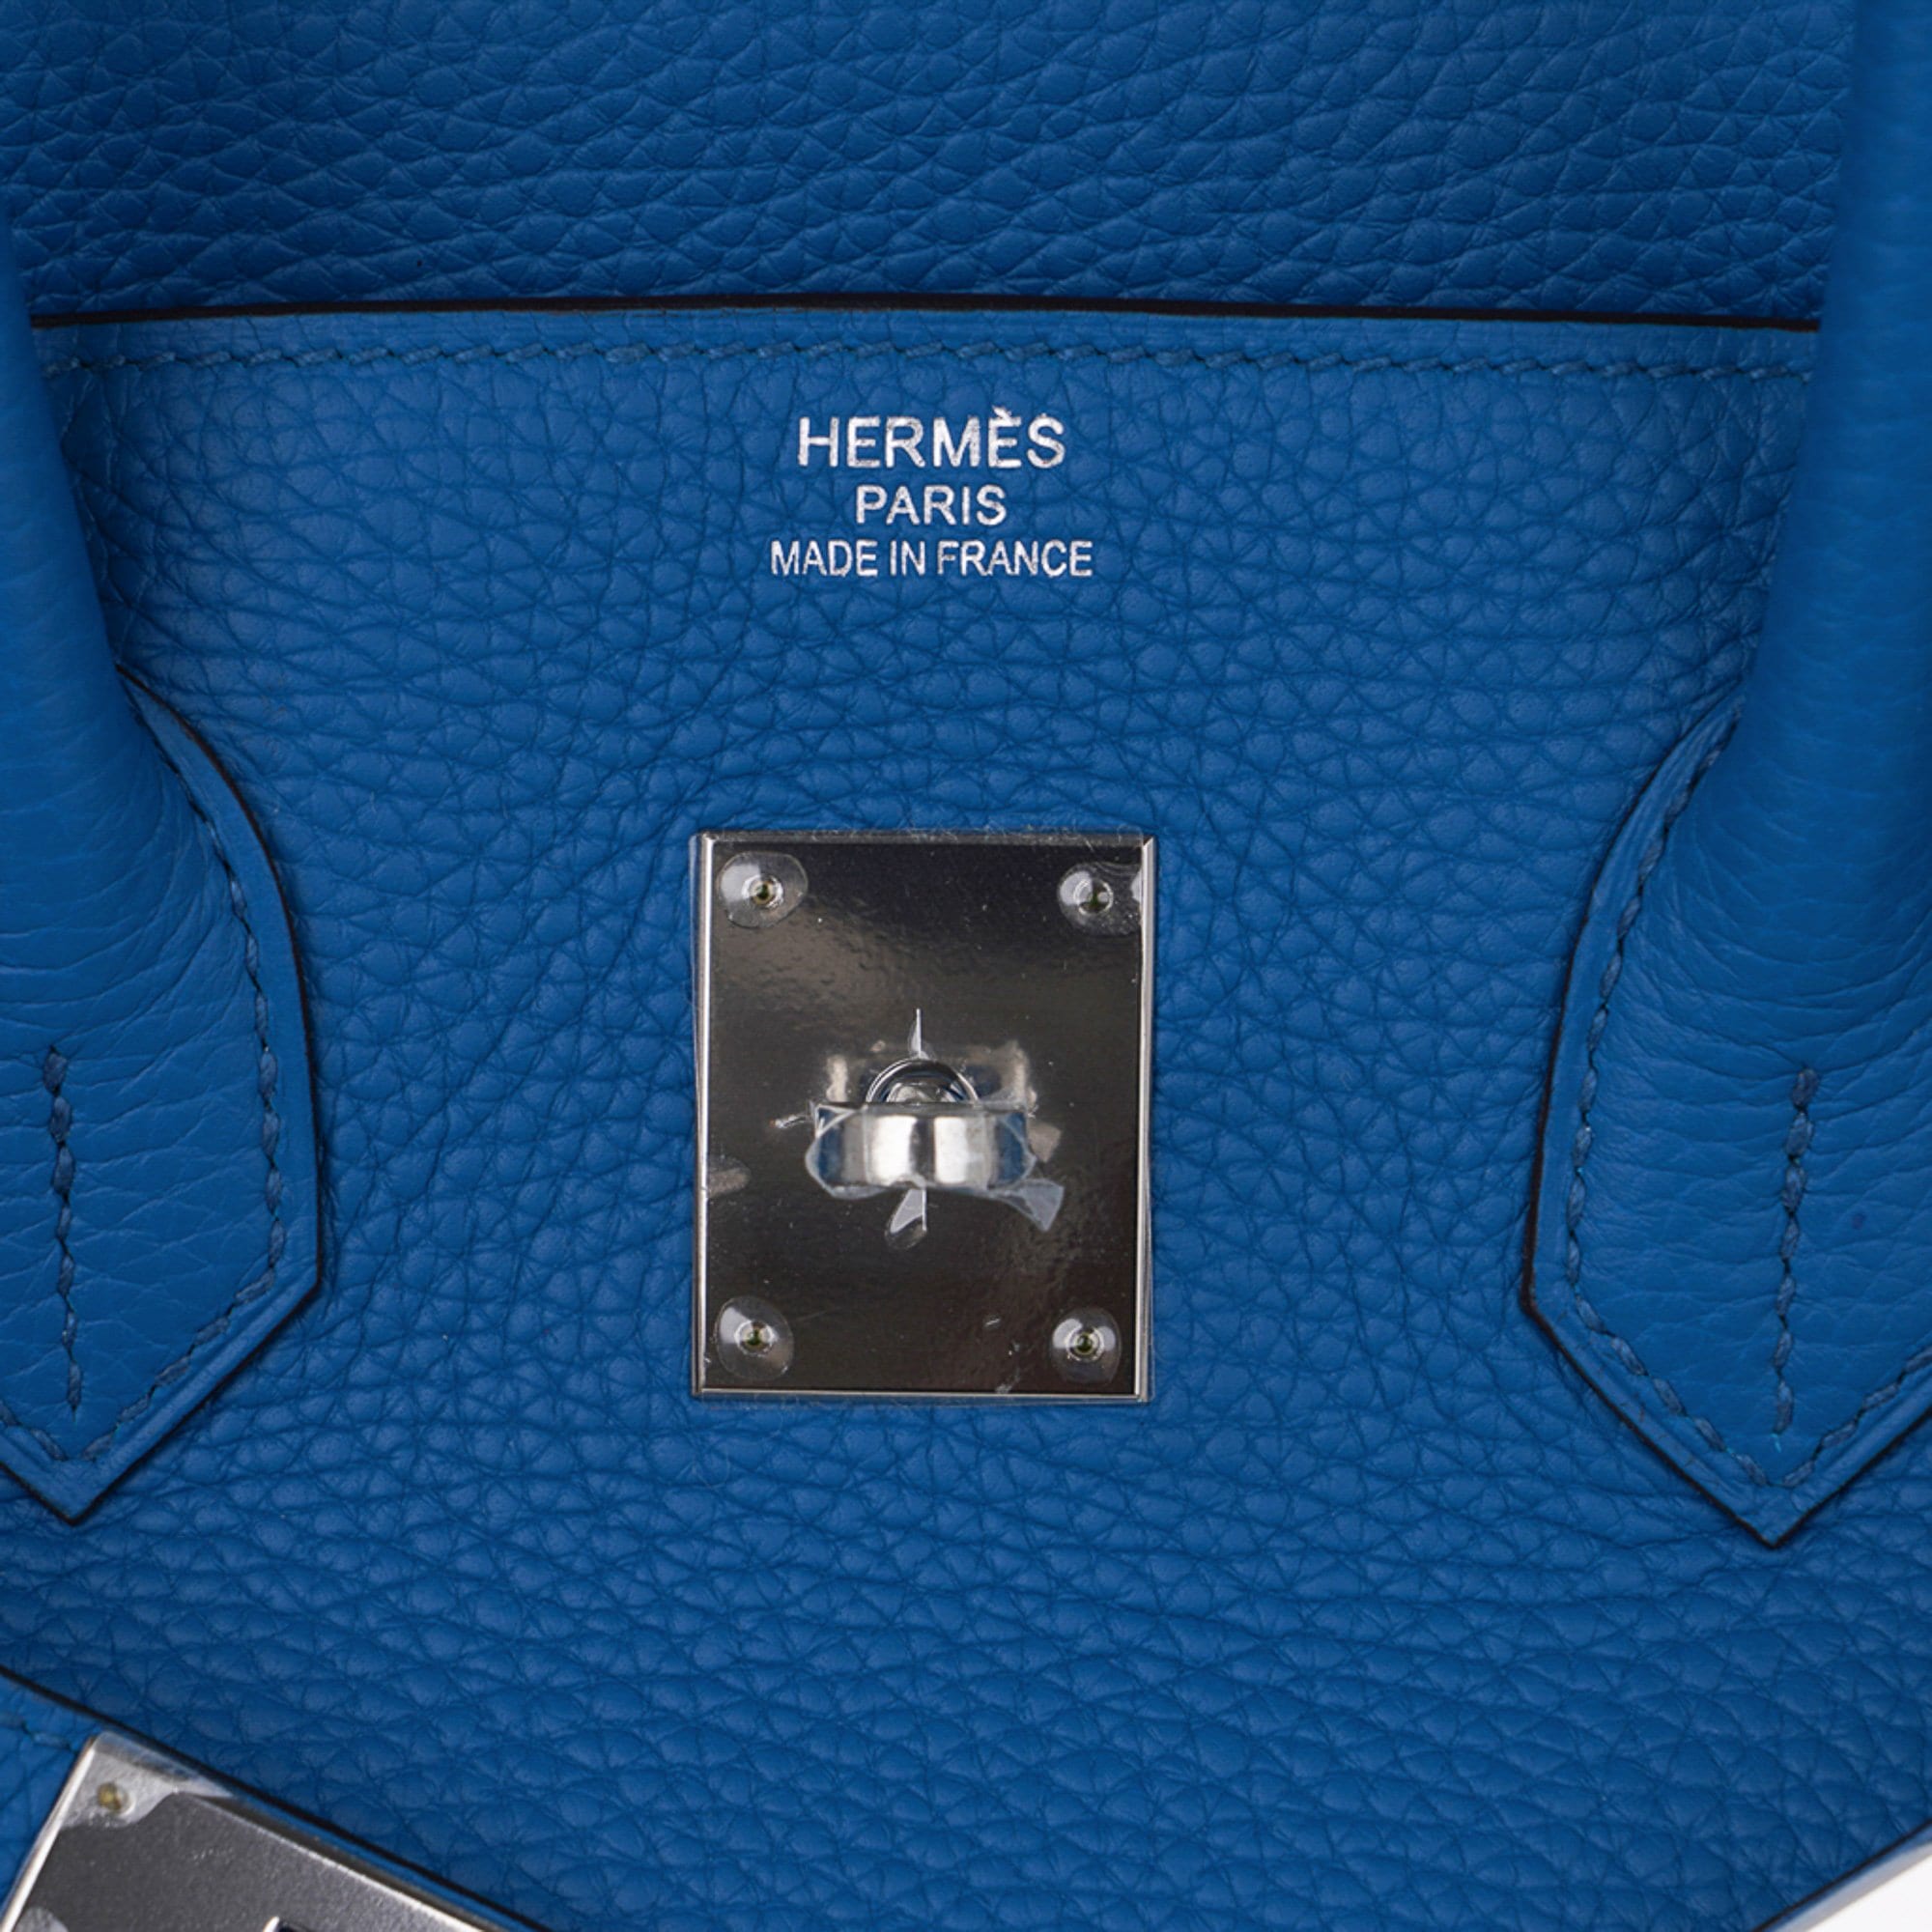 Hermes Birkin 35 Bag Capucine Togo Leather with Gold Hardware – Mightychic